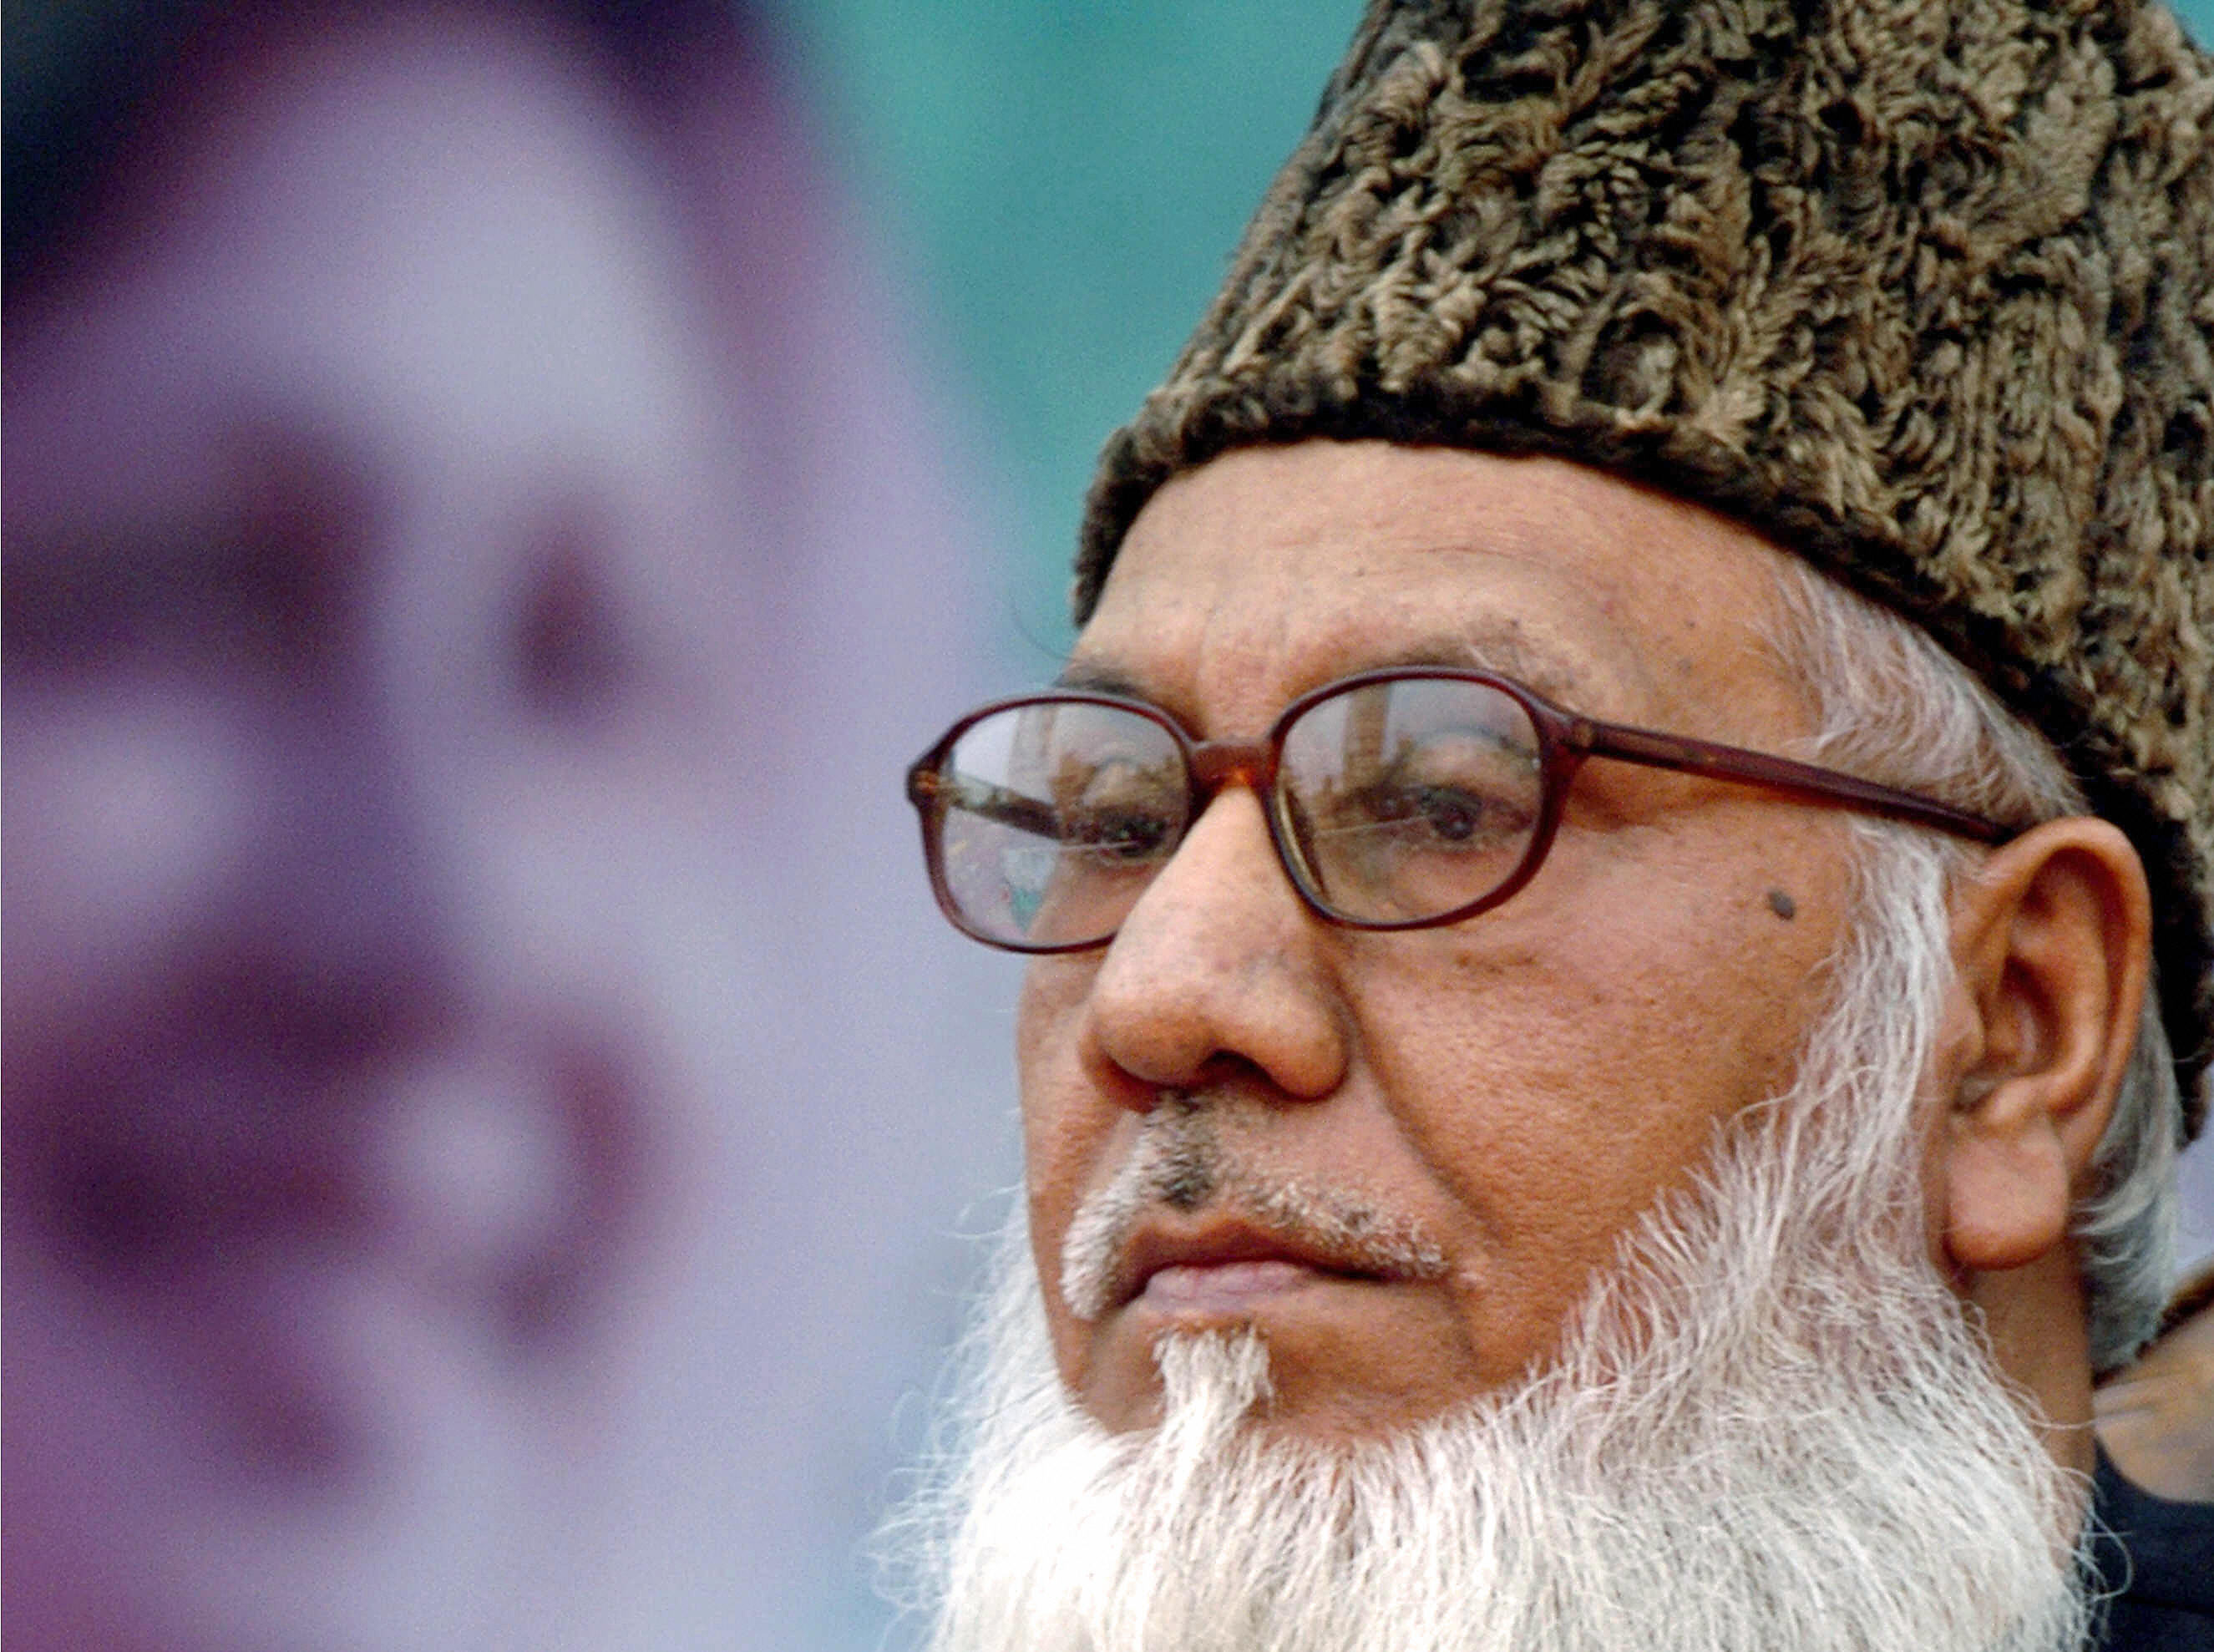 A file photo from 2006 shows leader of the Jamaat-e-Islami Islamic party in Bangladesh Matiur Rahman Nizami (FARJANA KHAN GODHULY—AFP/Getty Images)